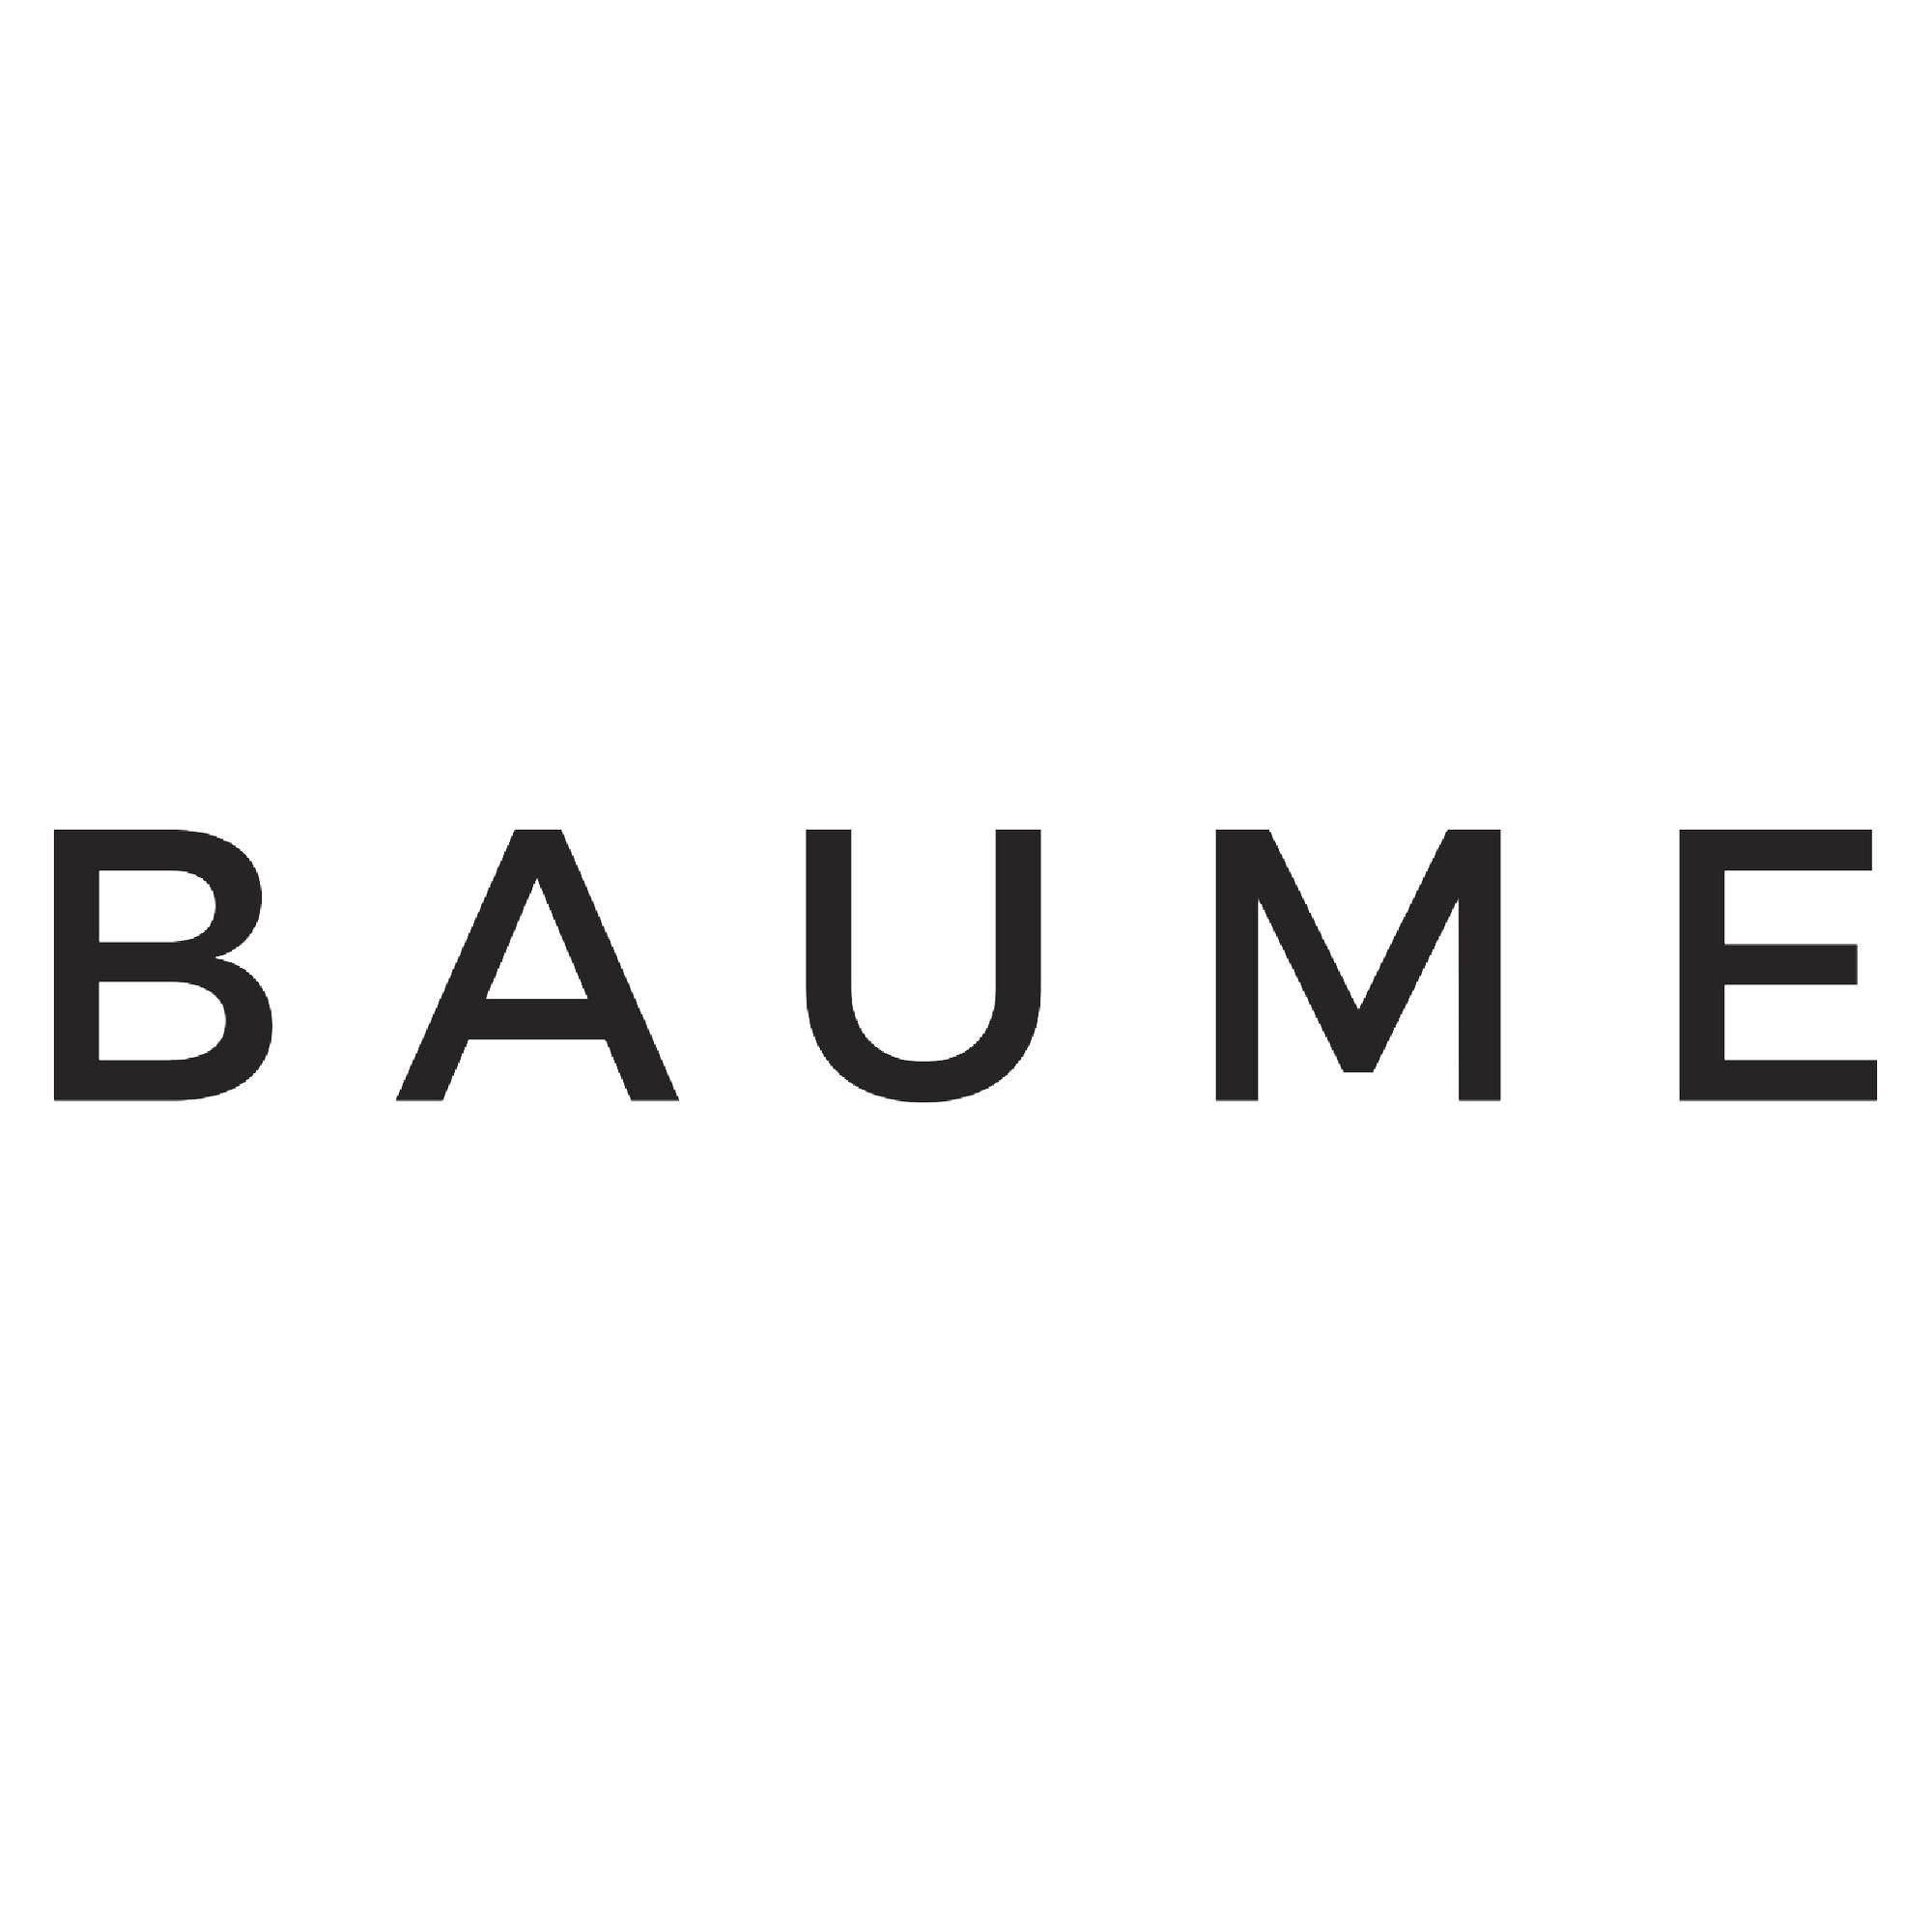 baume-logo_copy black.png